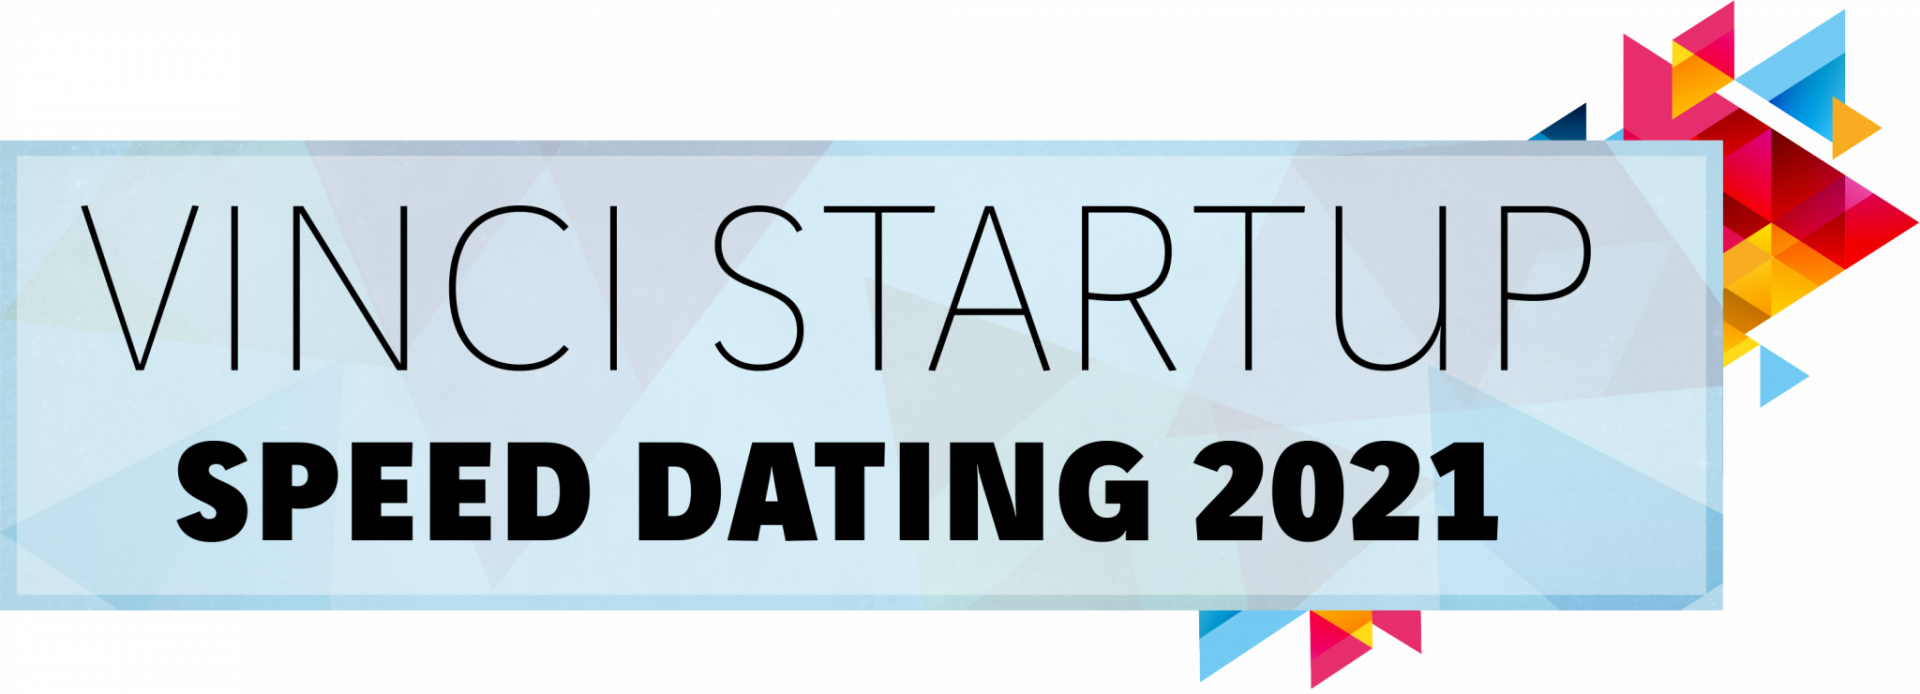 VINCI Startup Speed Dating 2021